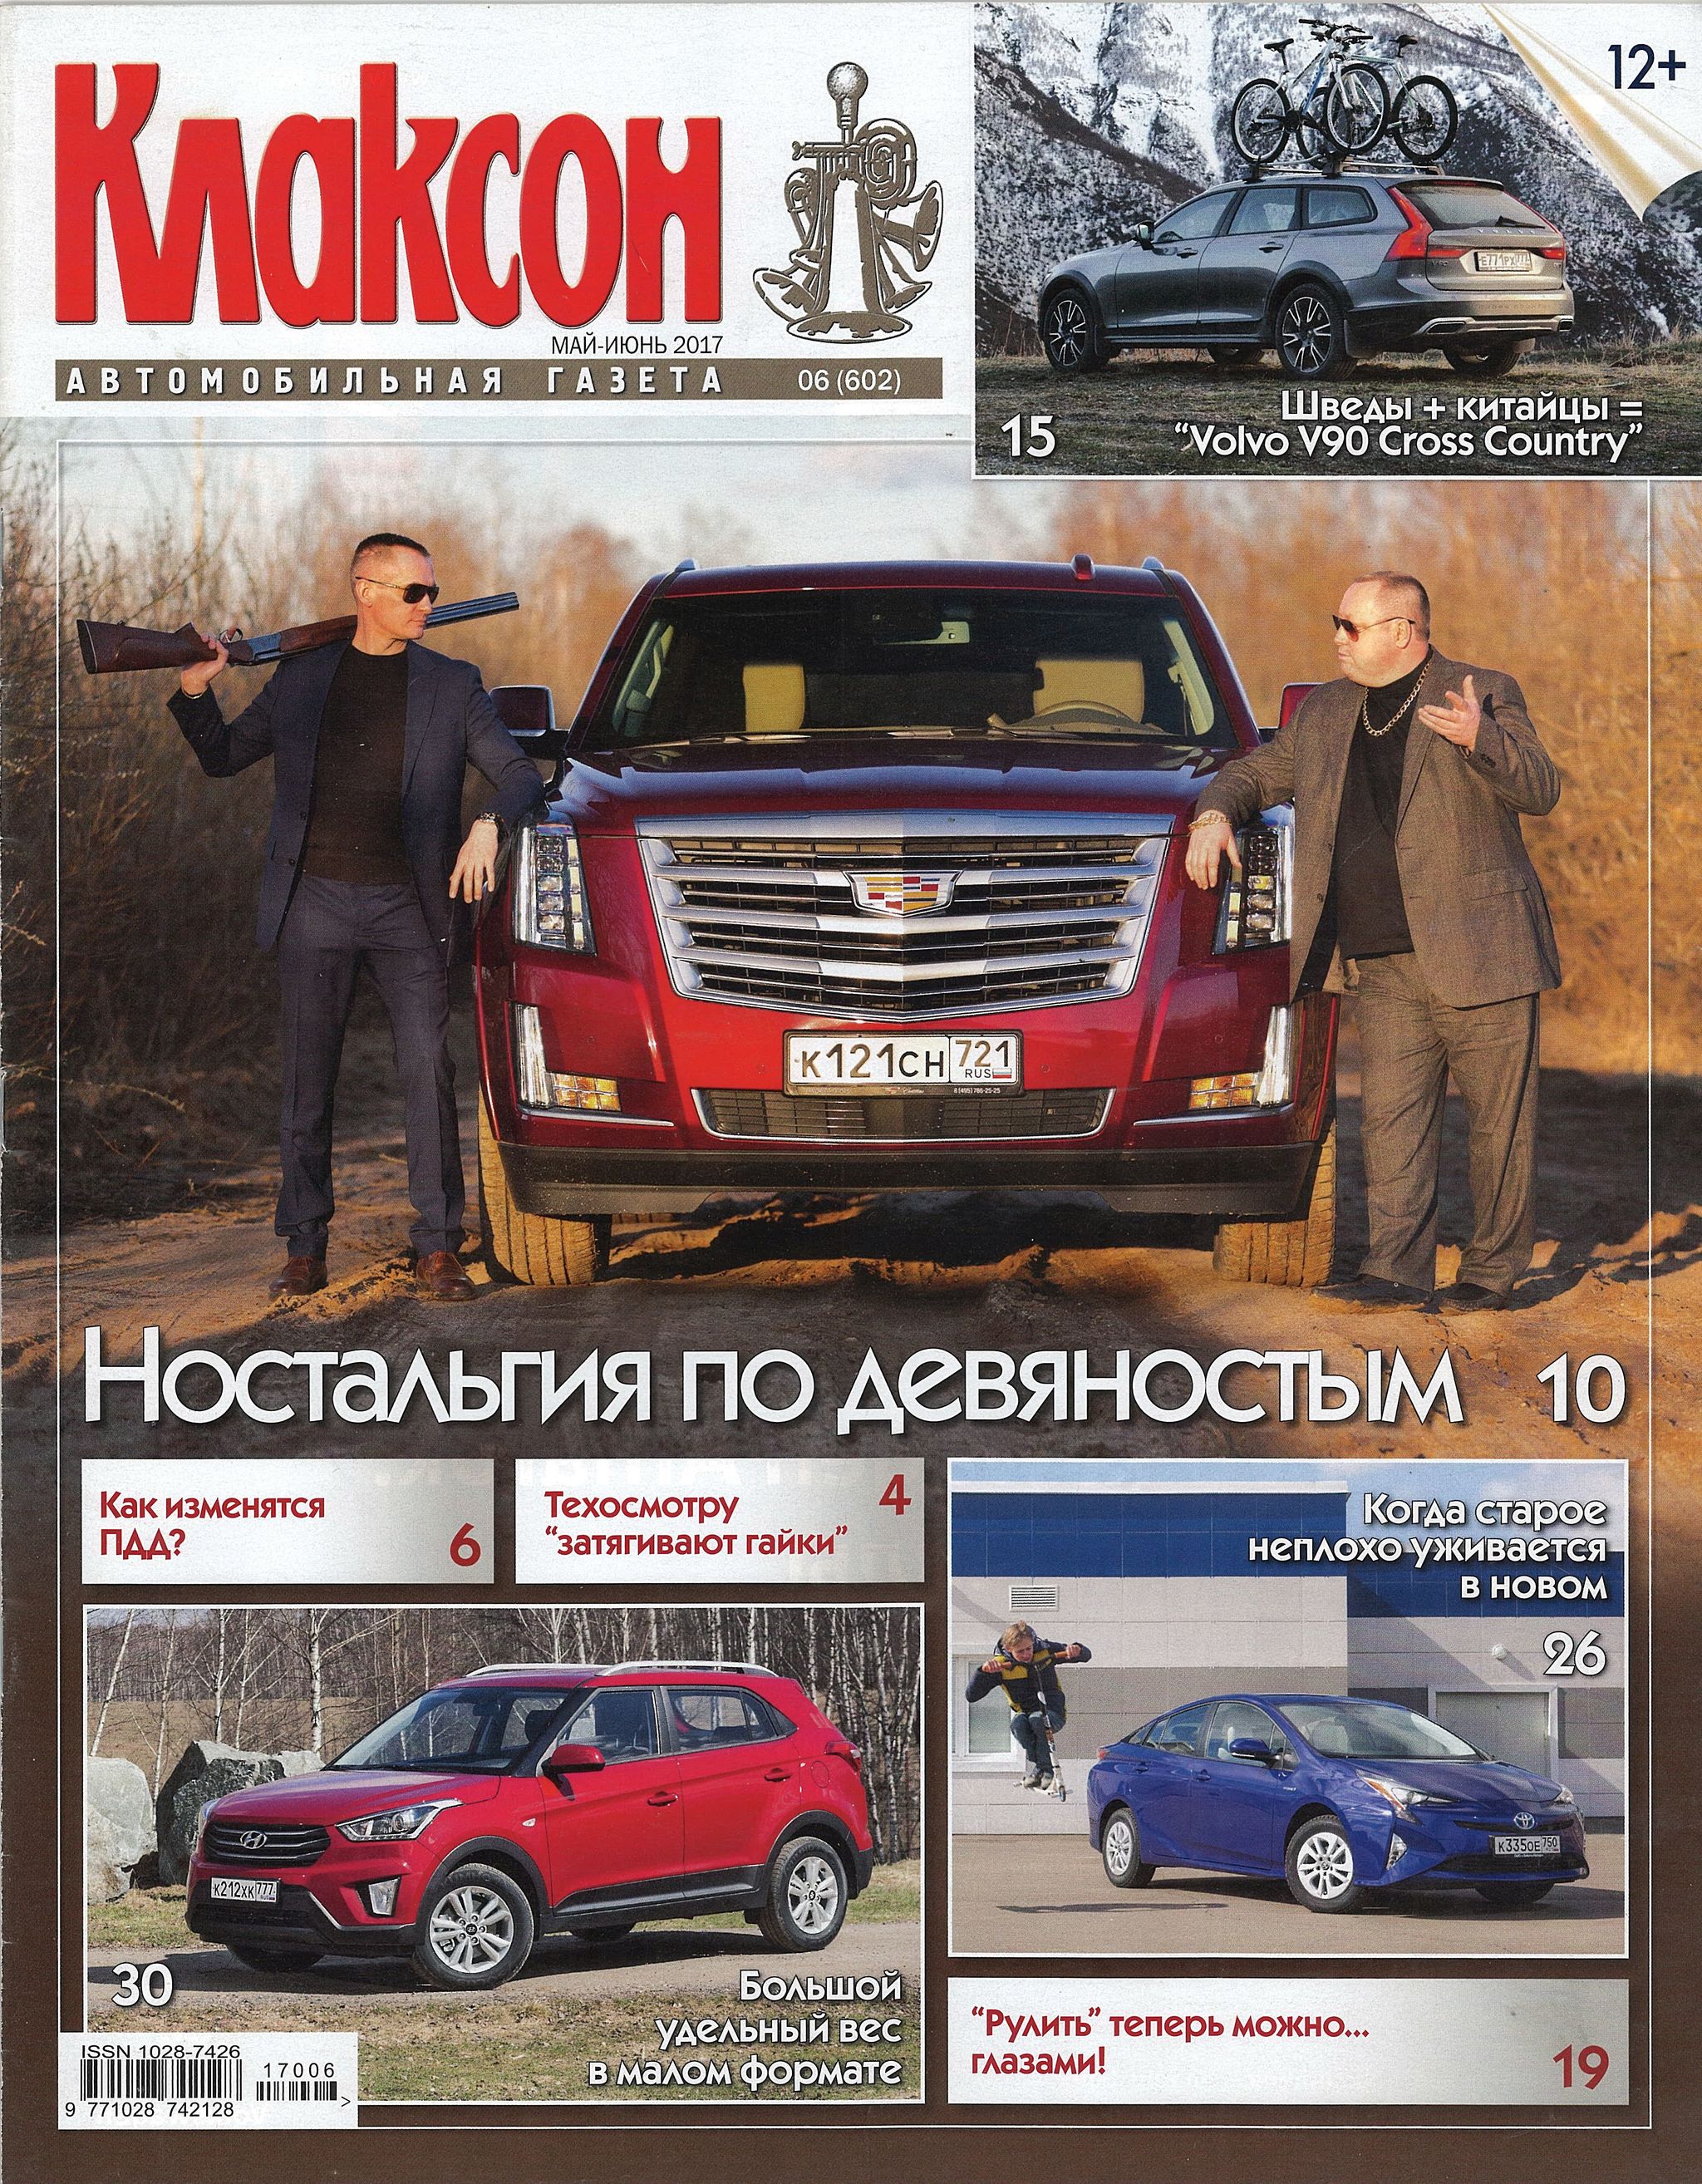 Klaxon newspaper. Year 2017 - Klaxon, Magazine, Newspapers, Auto, Longpost